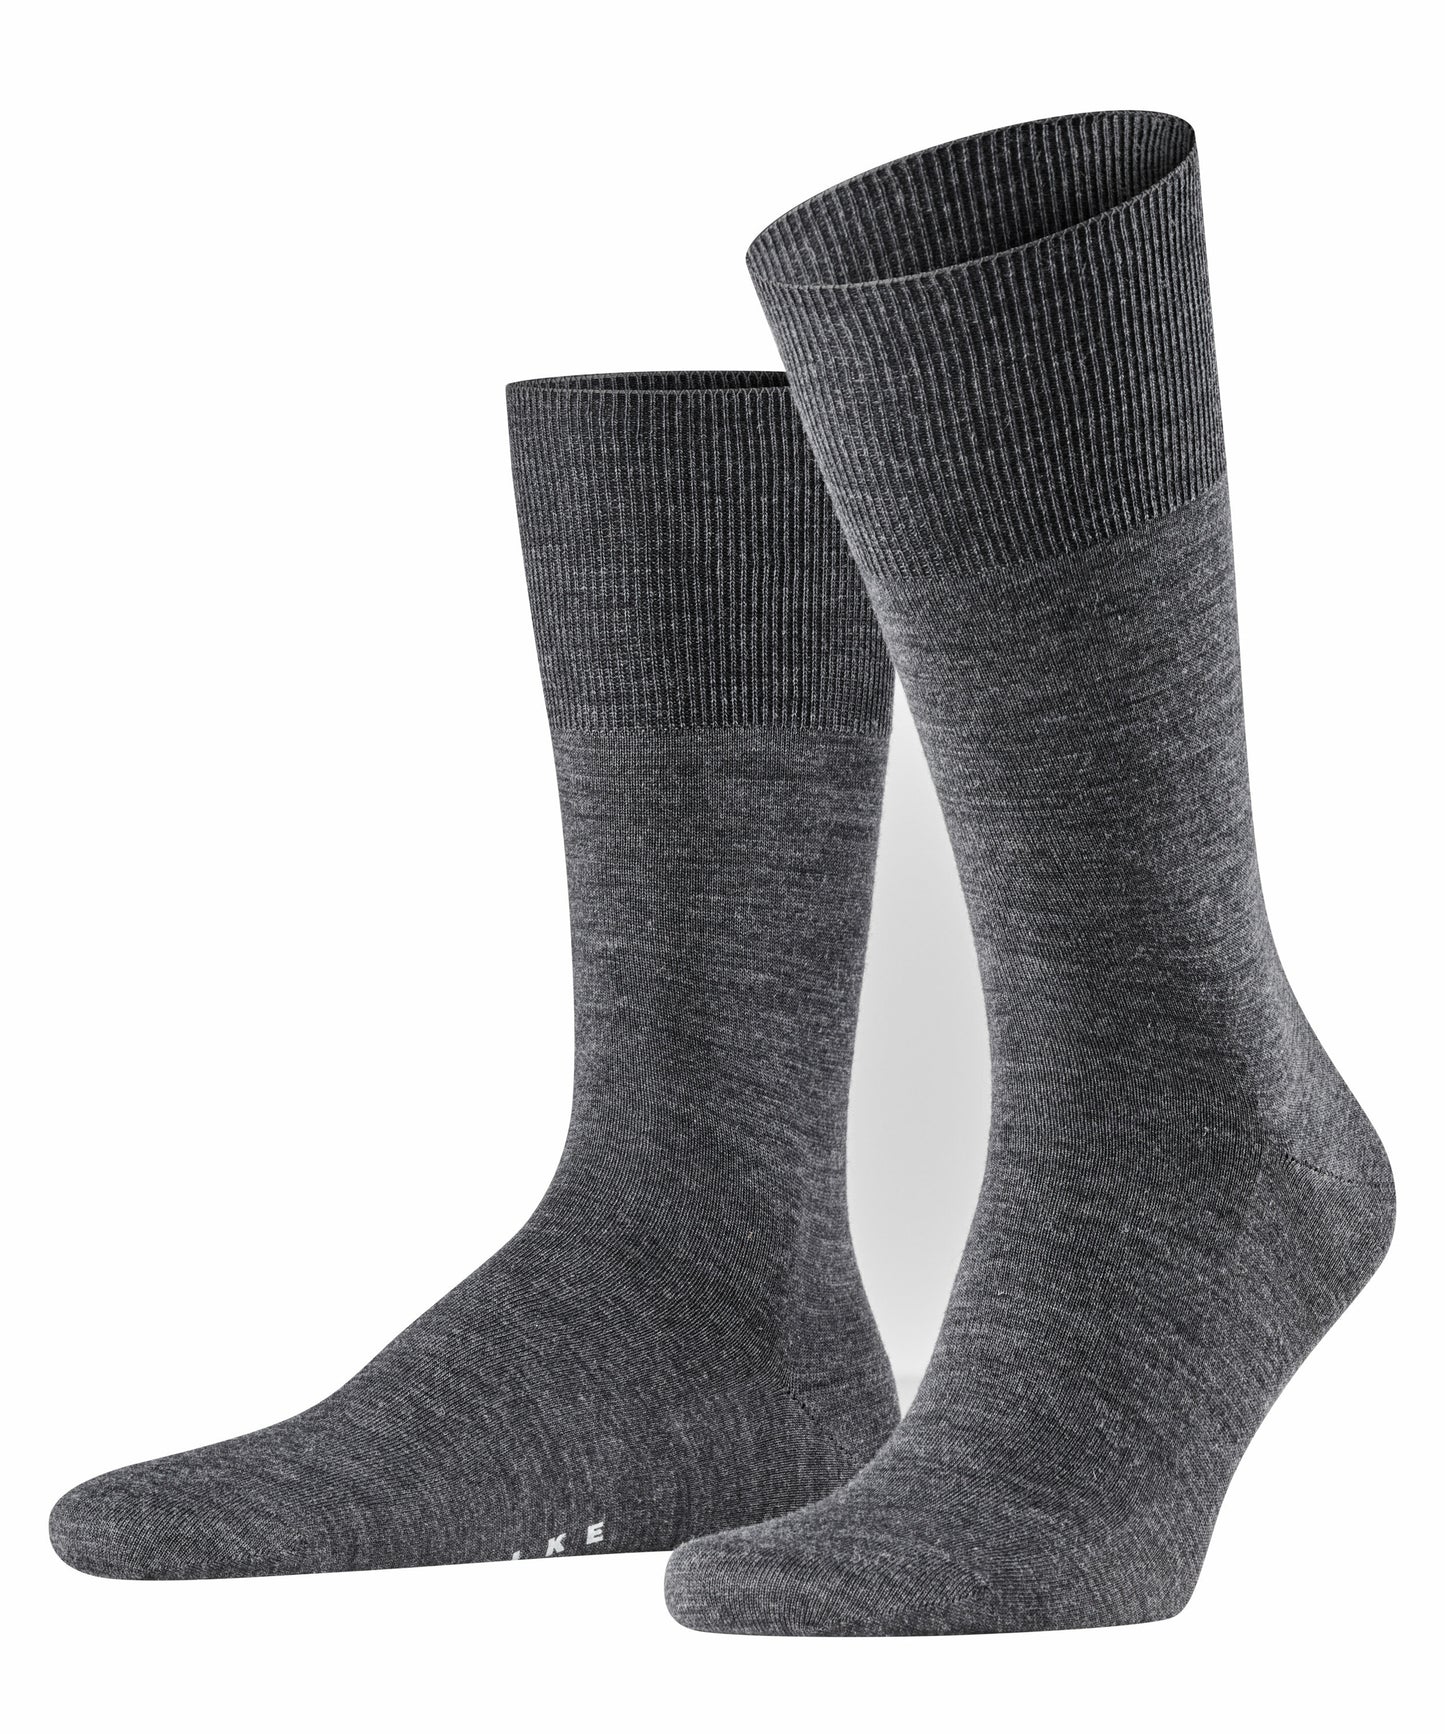 Navy merino-cotton socks Falke Airport - 14435/6370